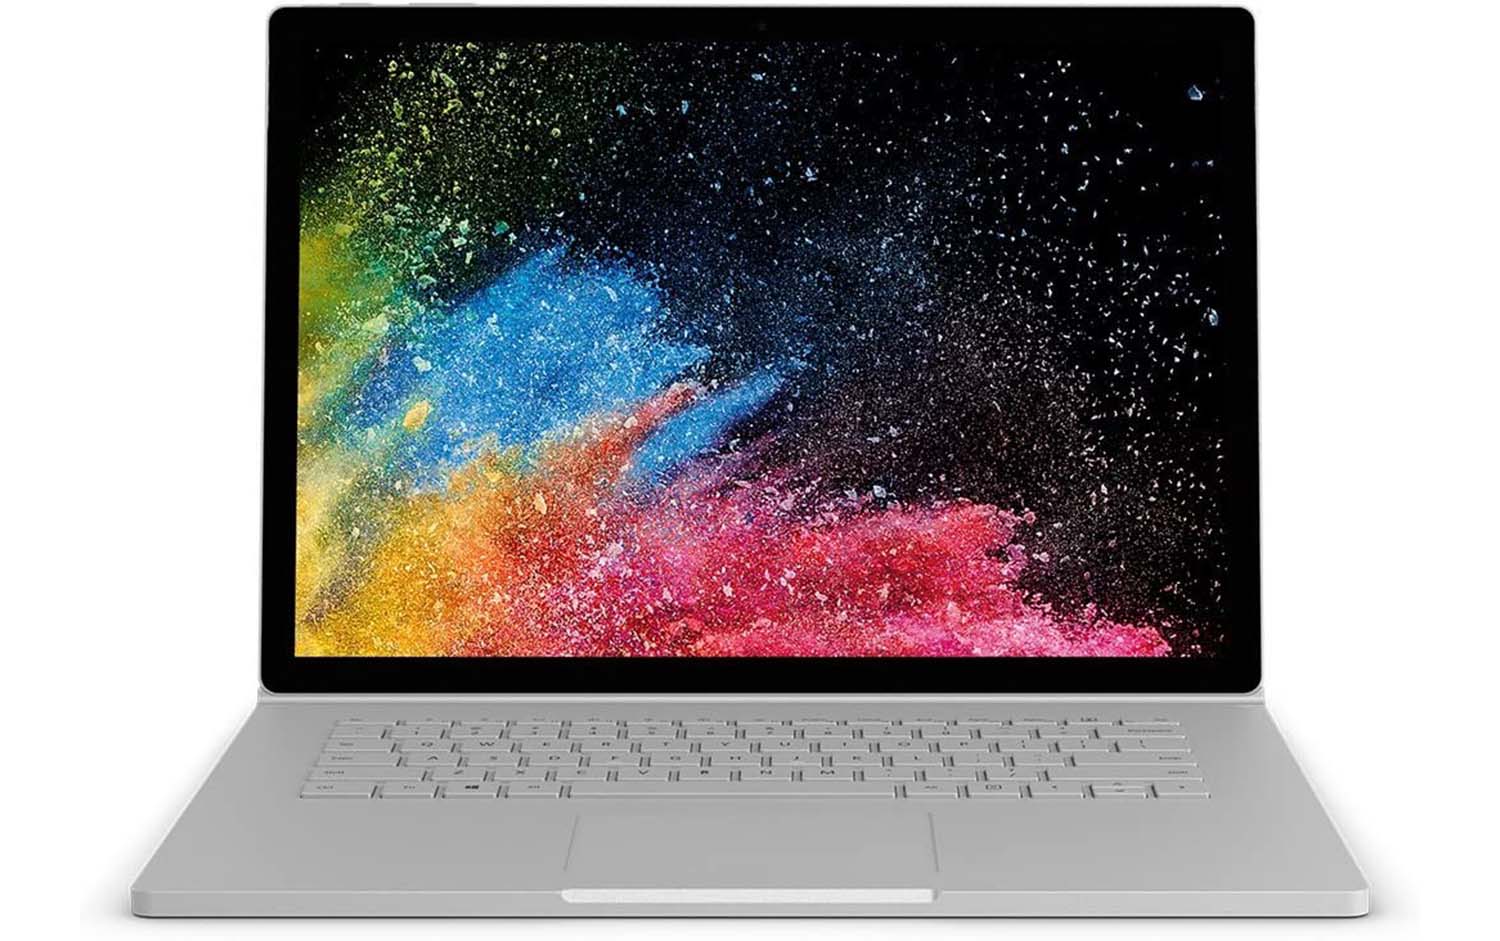 Microsoft Surface Book 3 Intel Core i7 10th Gen 16GB RAM 256GB SSD Touchscreen Windows 11 Home Nvidia GeForce GTX 1650 with Max-Q Design